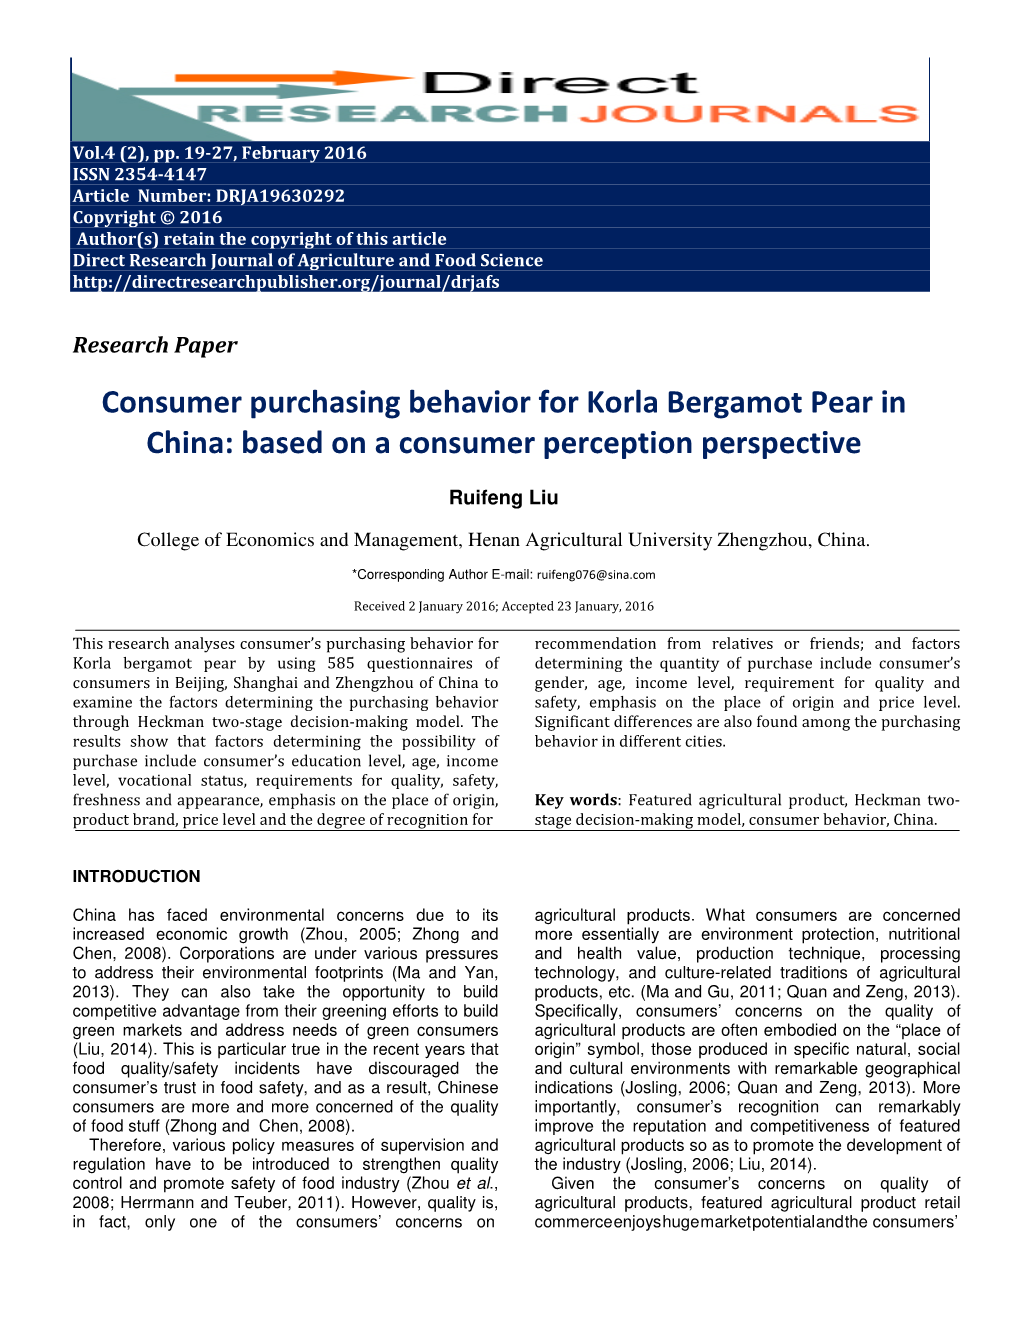 Consumer Purchasing Behavior for Korla Bergamot Pear in China: Based on a Consumer Perception Perspective